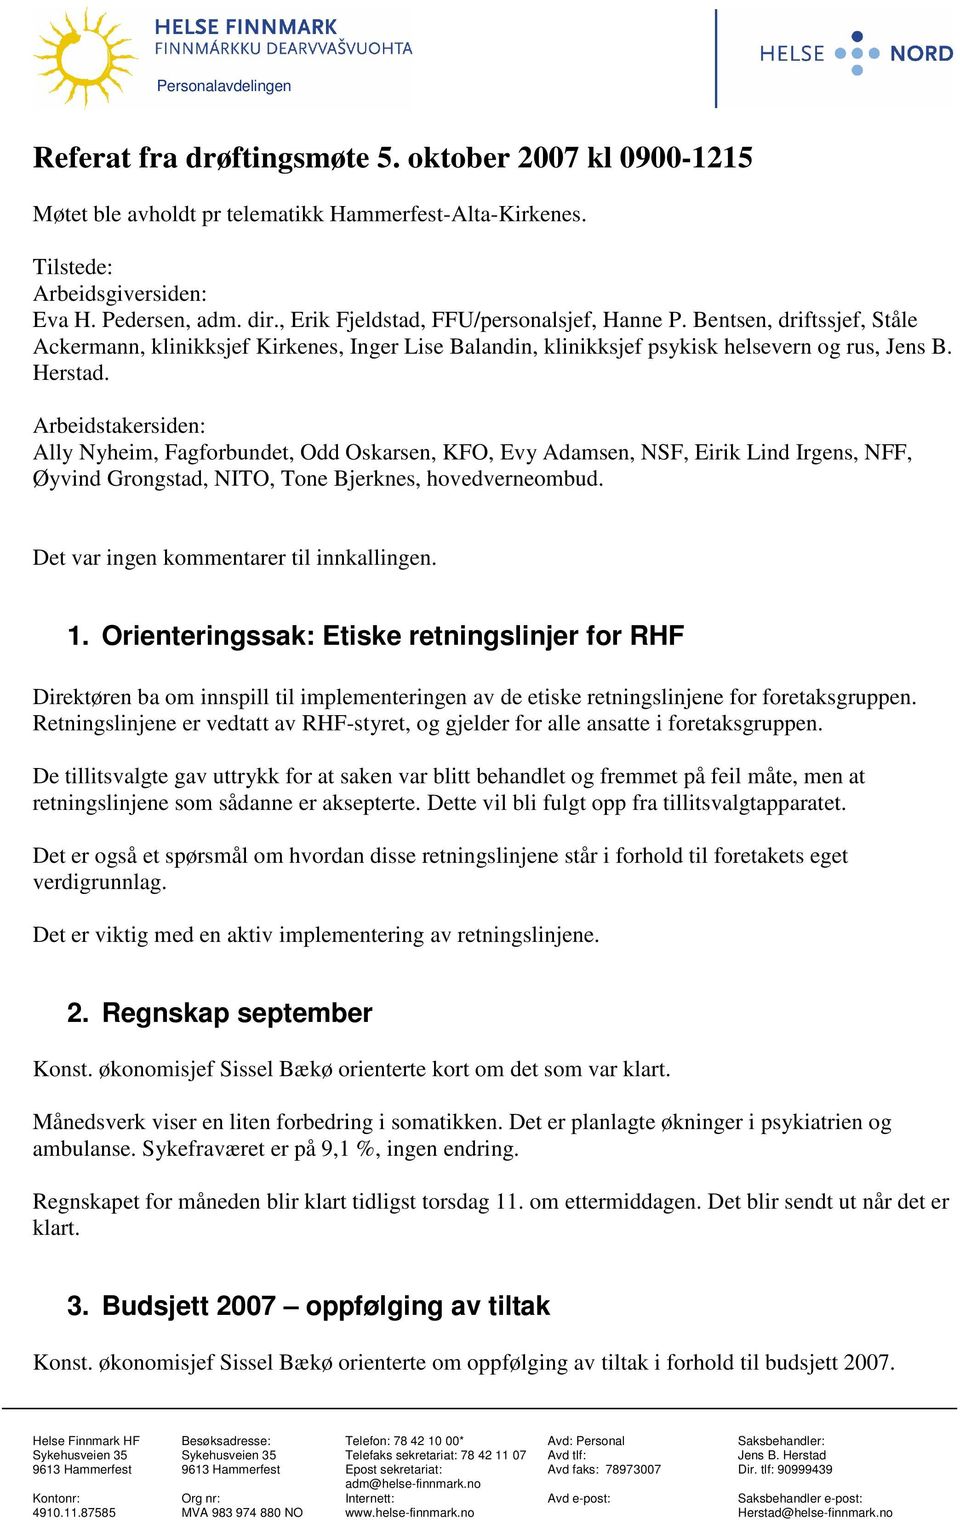 Arbeidstakersiden: Ally Nyheim, Fagforbundet, Odd Oskarsen, KFO, Evy Adamsen, NSF, Eirik Lind Irgens, NFF, Øyvind Grongstad, NITO, Tone Bjerknes, hovedverneombud.